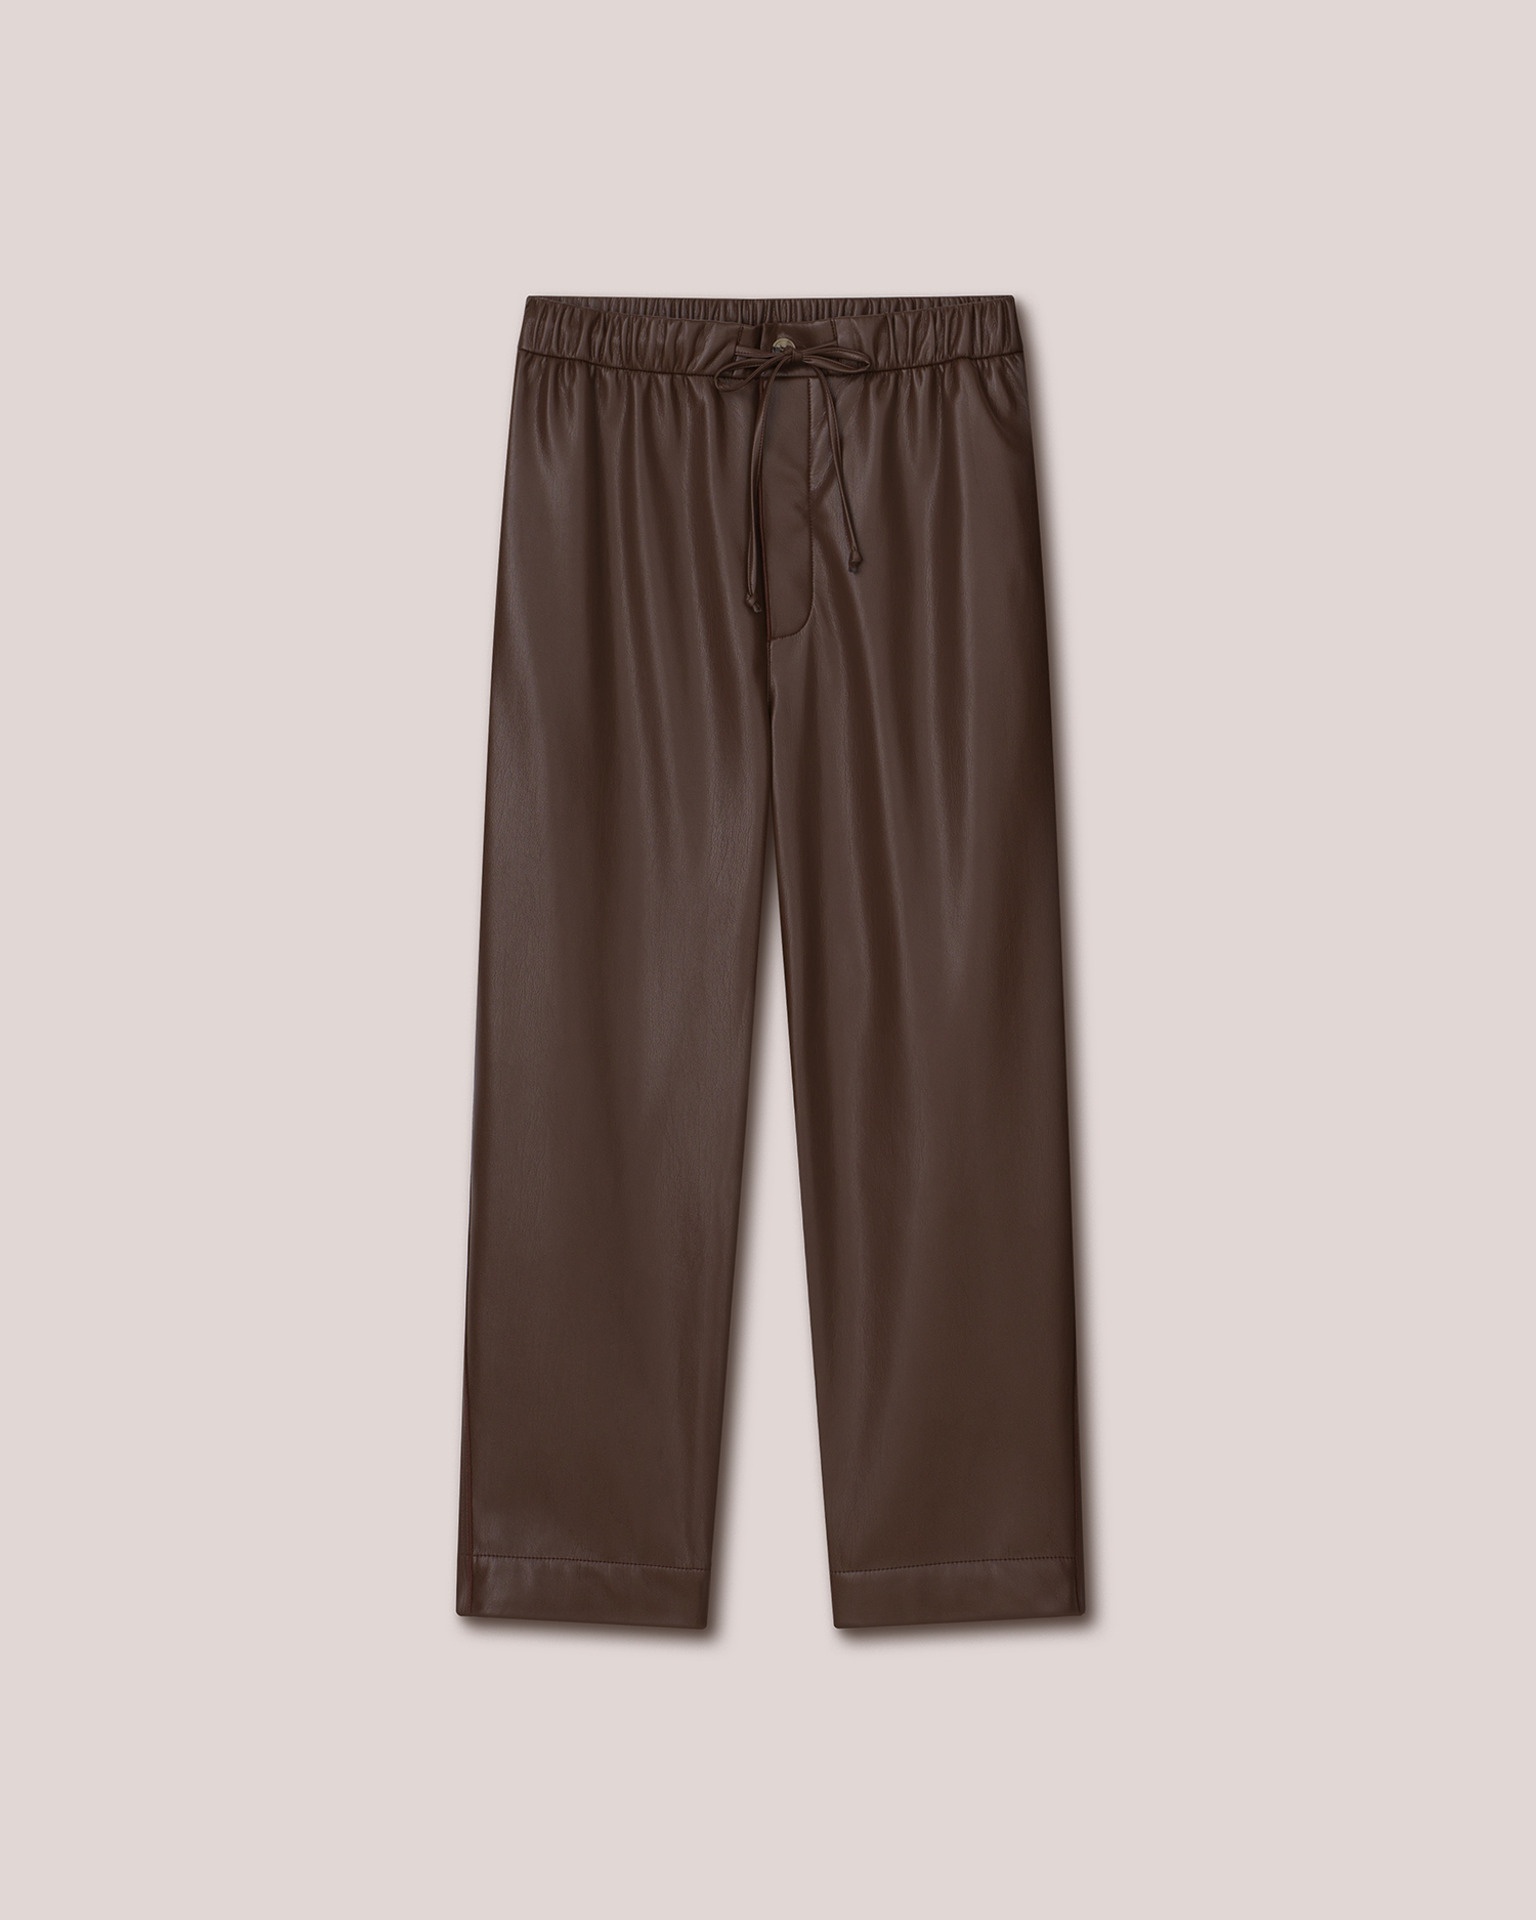 JAIN - Relaxed pants - Dark brown - 1